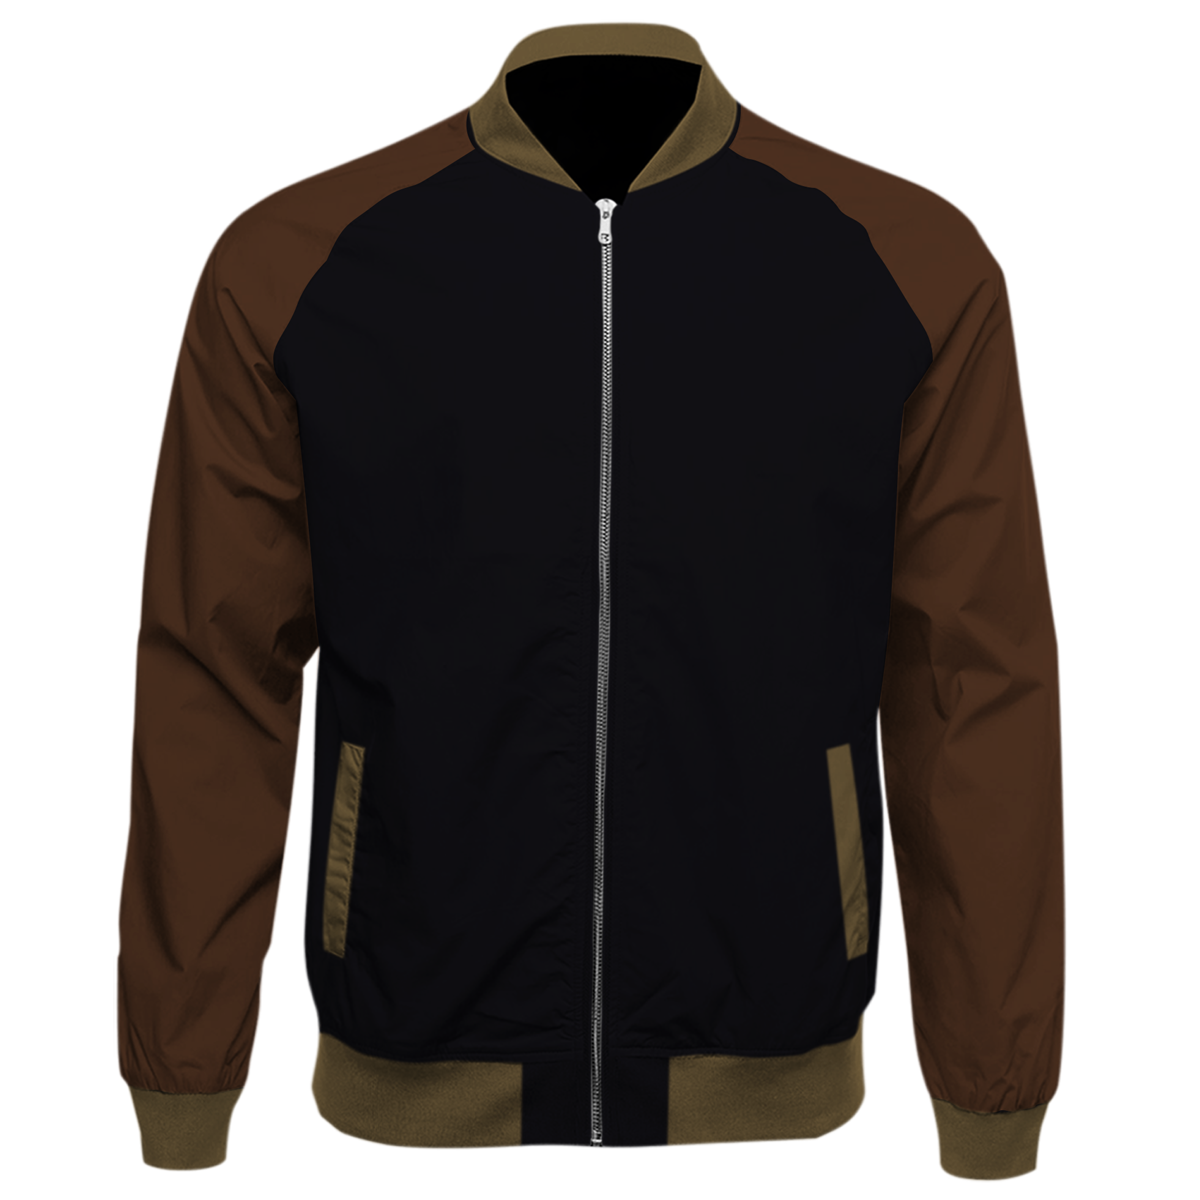 Custom Bomber Jacket Personalized | Custom Jackets ...